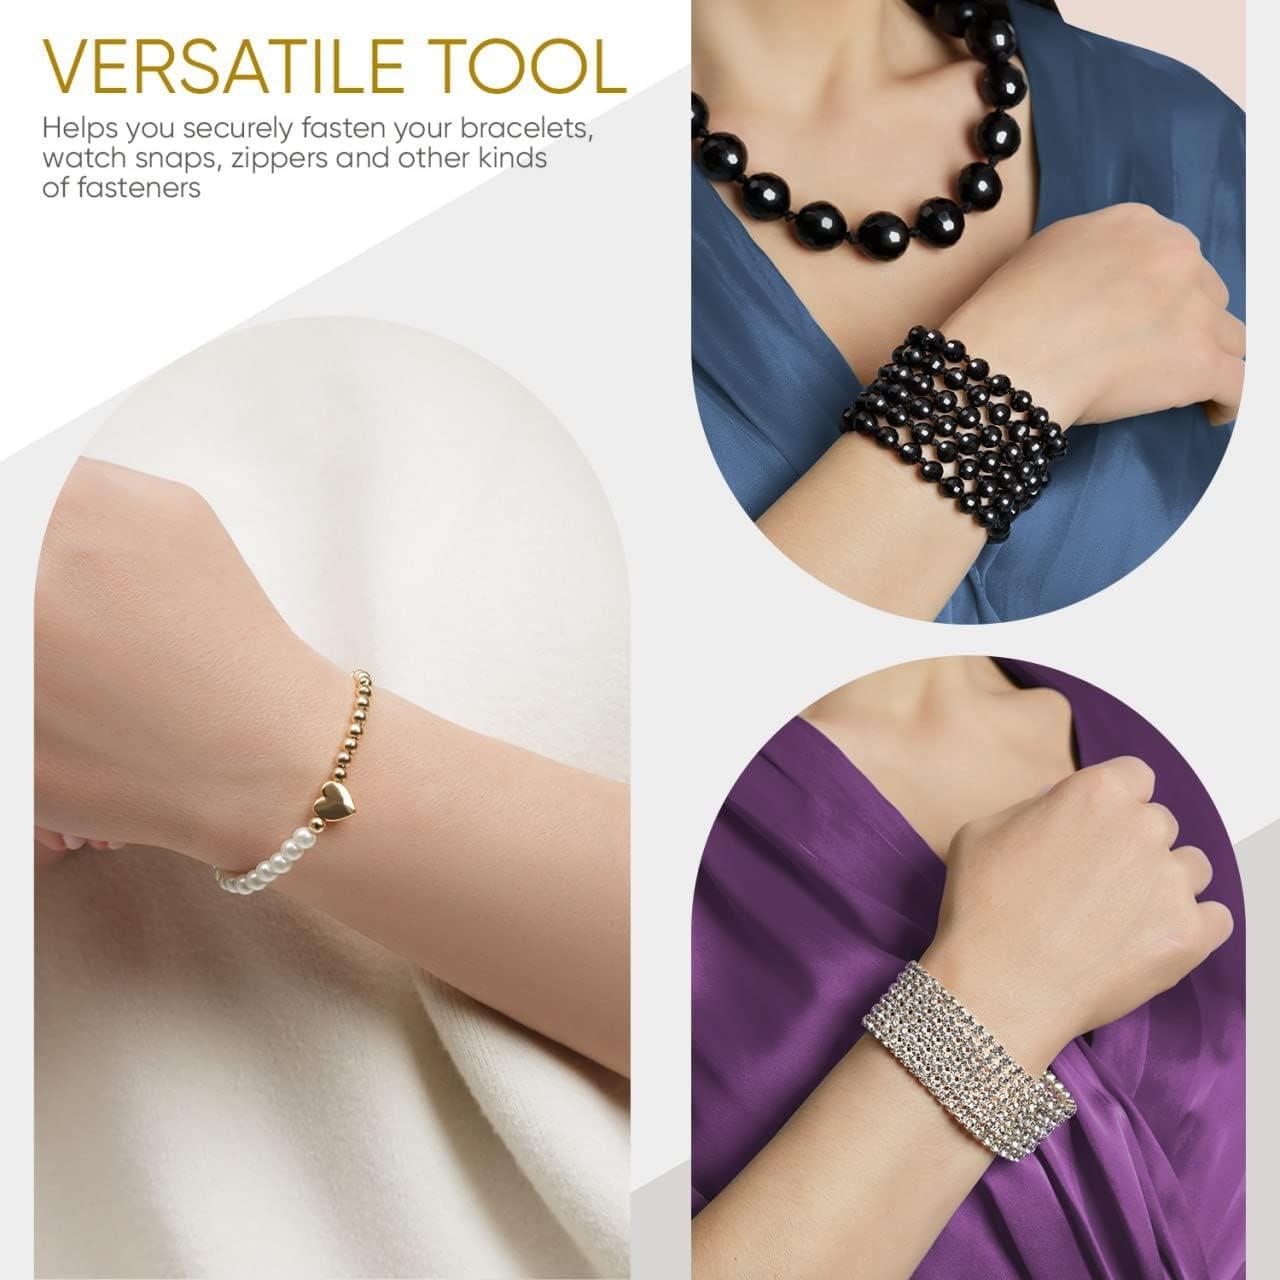  Bracelet Assistance Tool, Necklace Jewelry Watch Bracelet  Buckle Fastener Jewelry Fastening and Hook Assist